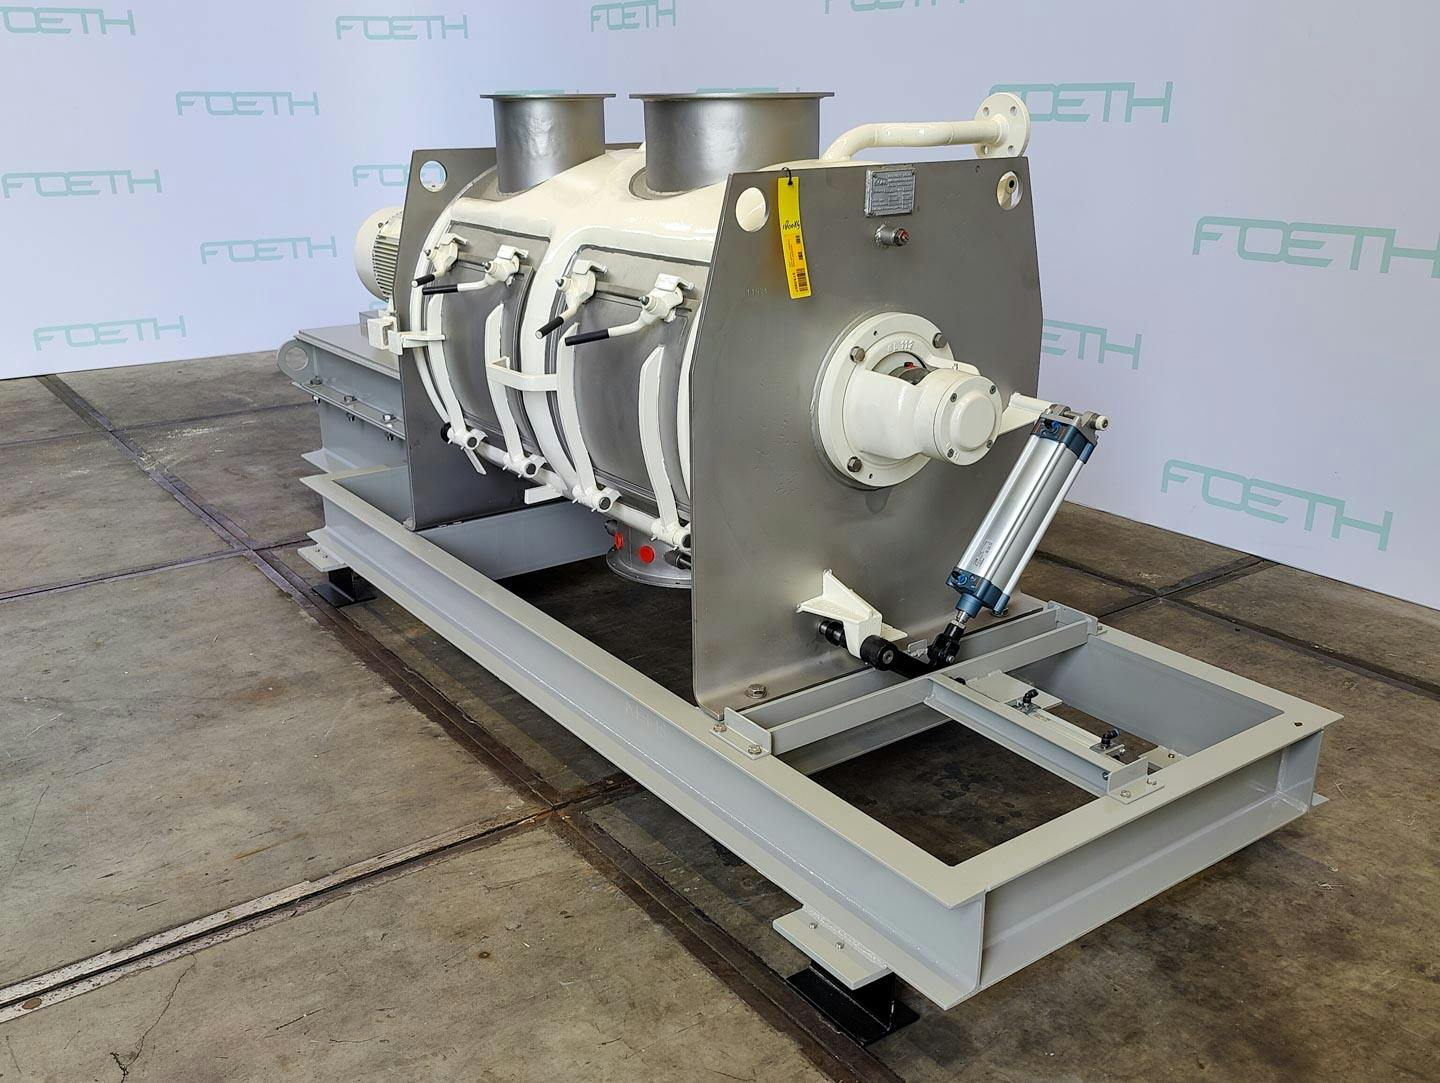 Loedige FKM-600 - Misturador turbo para pós - image 3